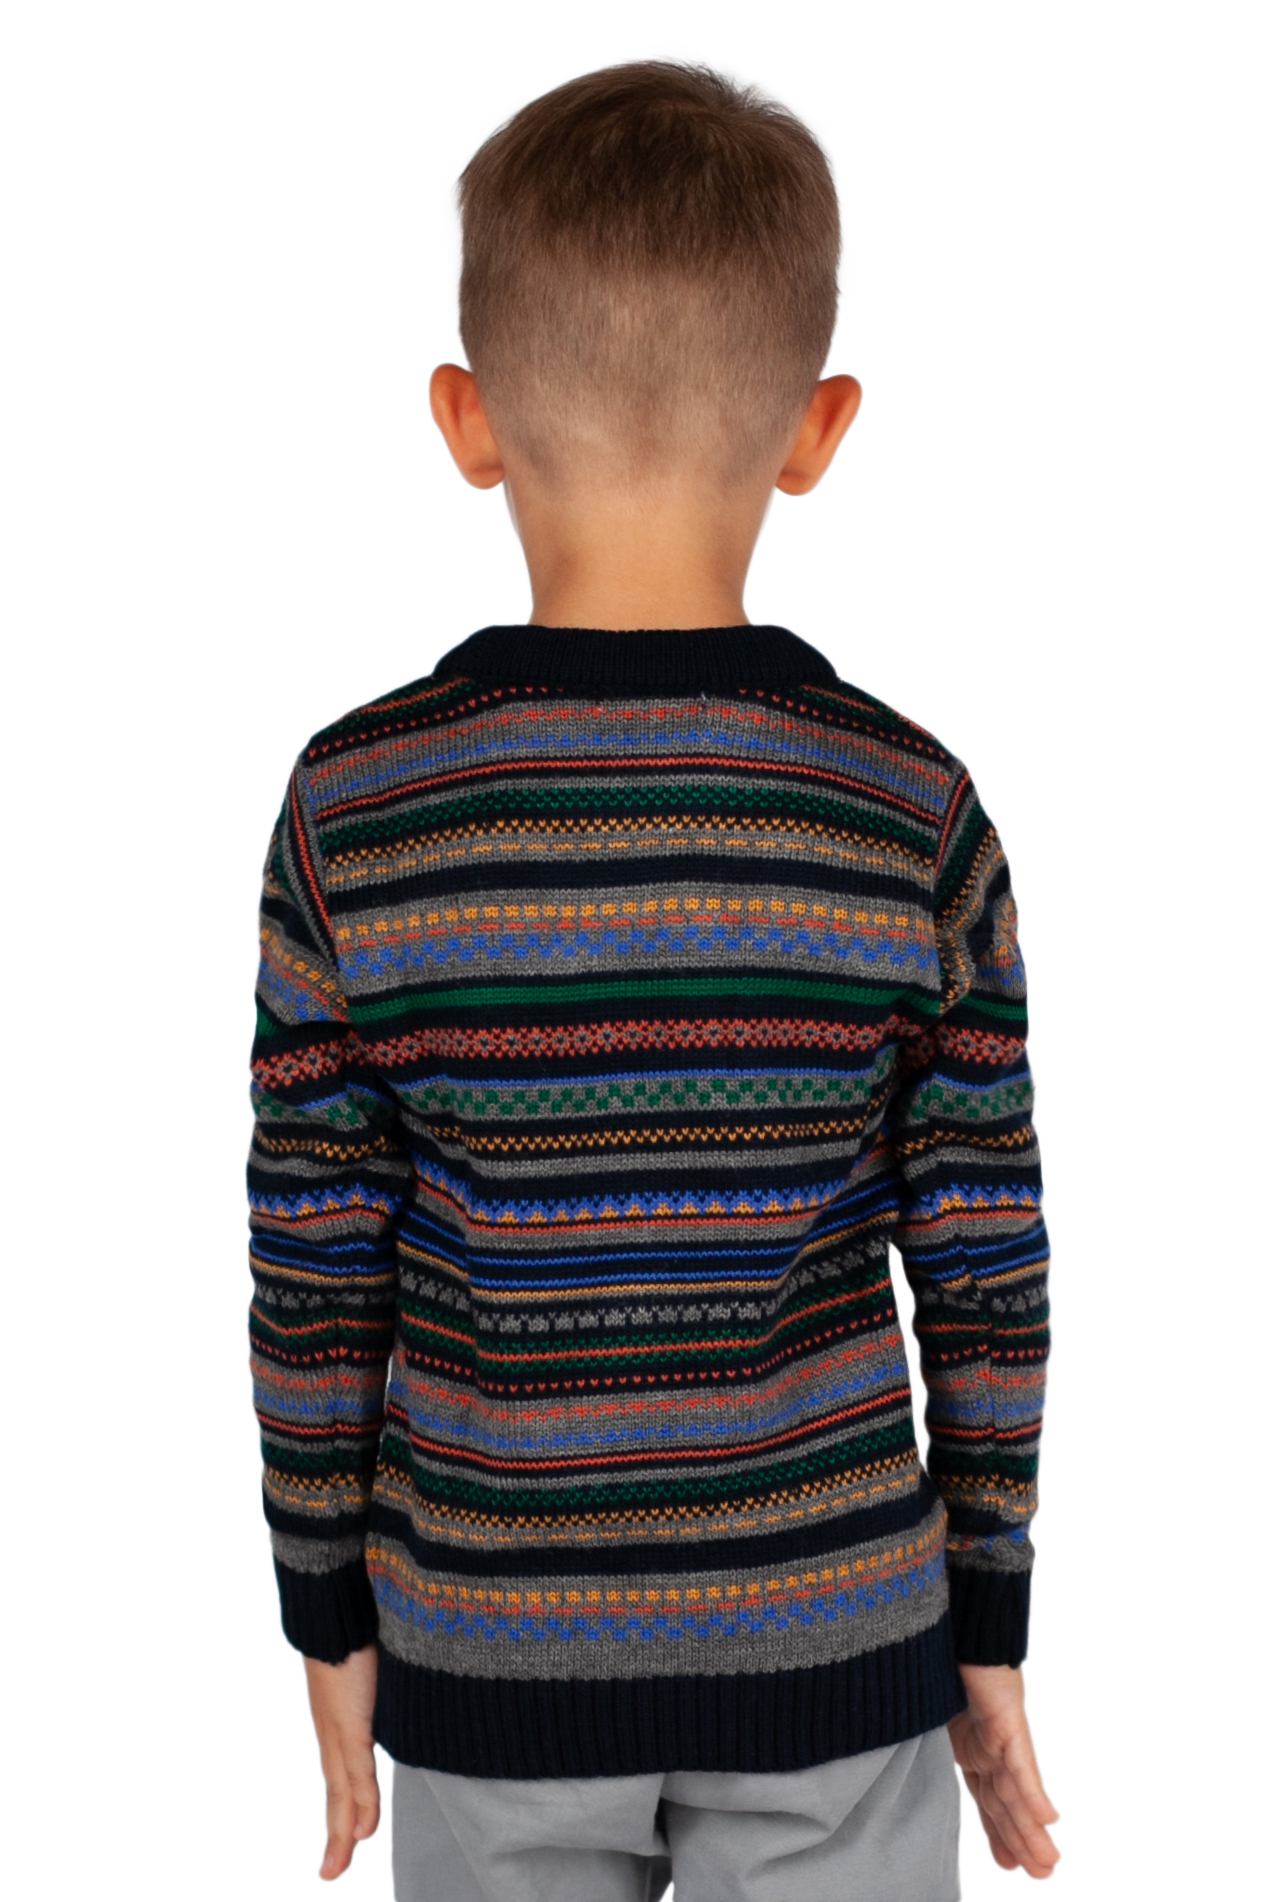 Джемпер для мальчика (арт. baon BK638504), размер 98-104, цвет multicolor#многоцветный Джемпер для мальчика (арт. baon BK638504) - фото 2